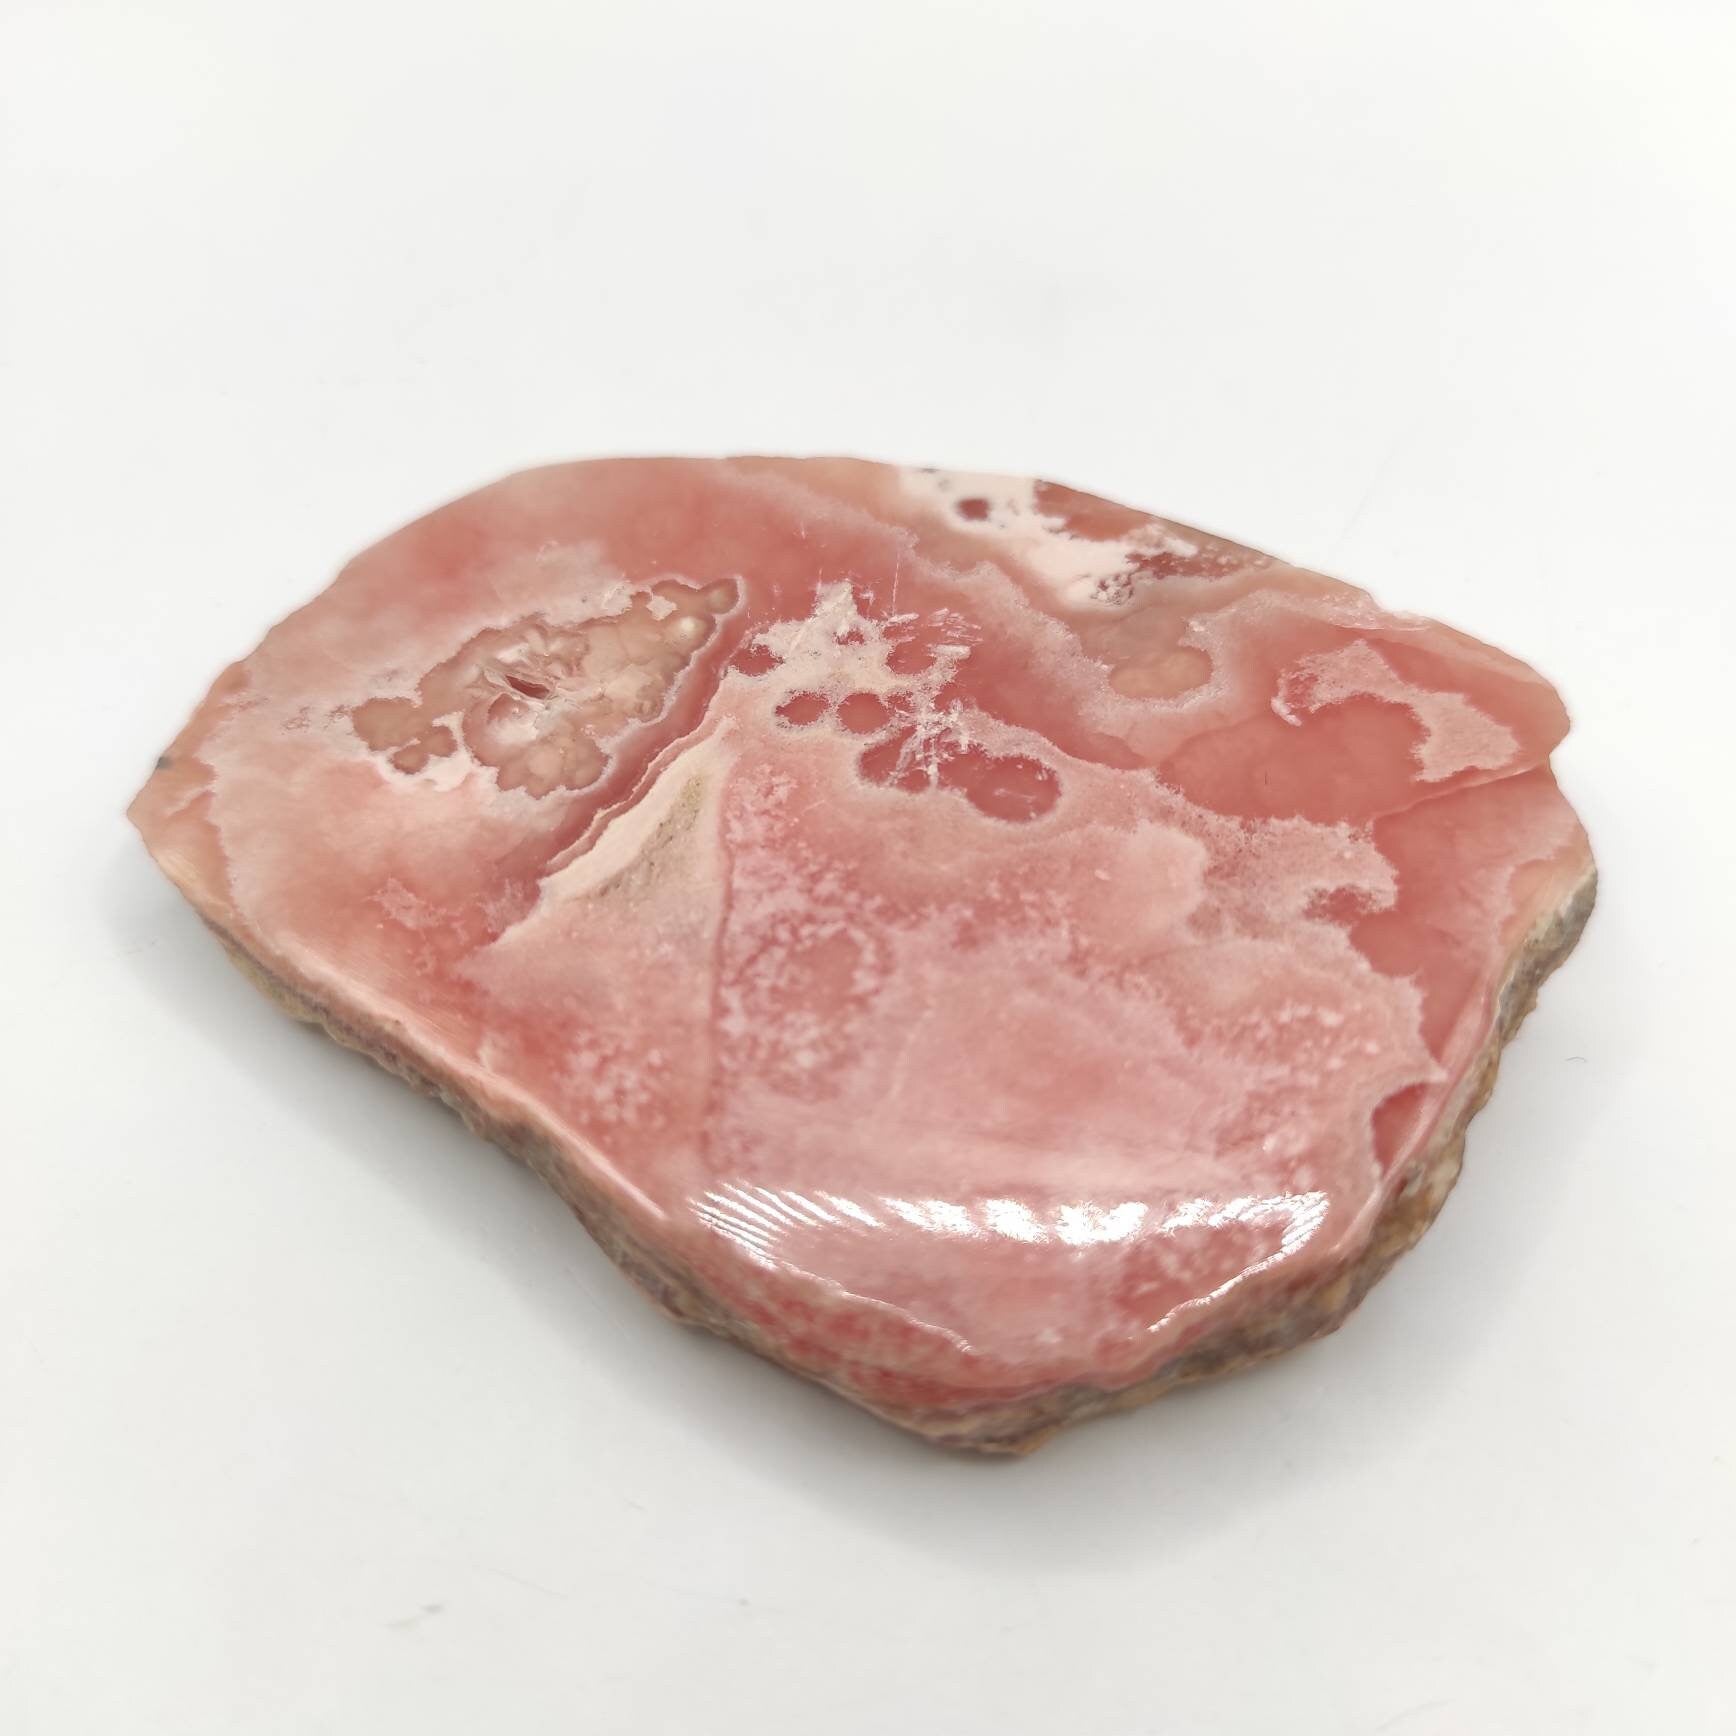 76g Rhodochrosite Slab from Argentina - Natural Pink Red Rhodochrosite - Andalgala, Catamarca, Argentina - Polished Rhodochrosite Crystal